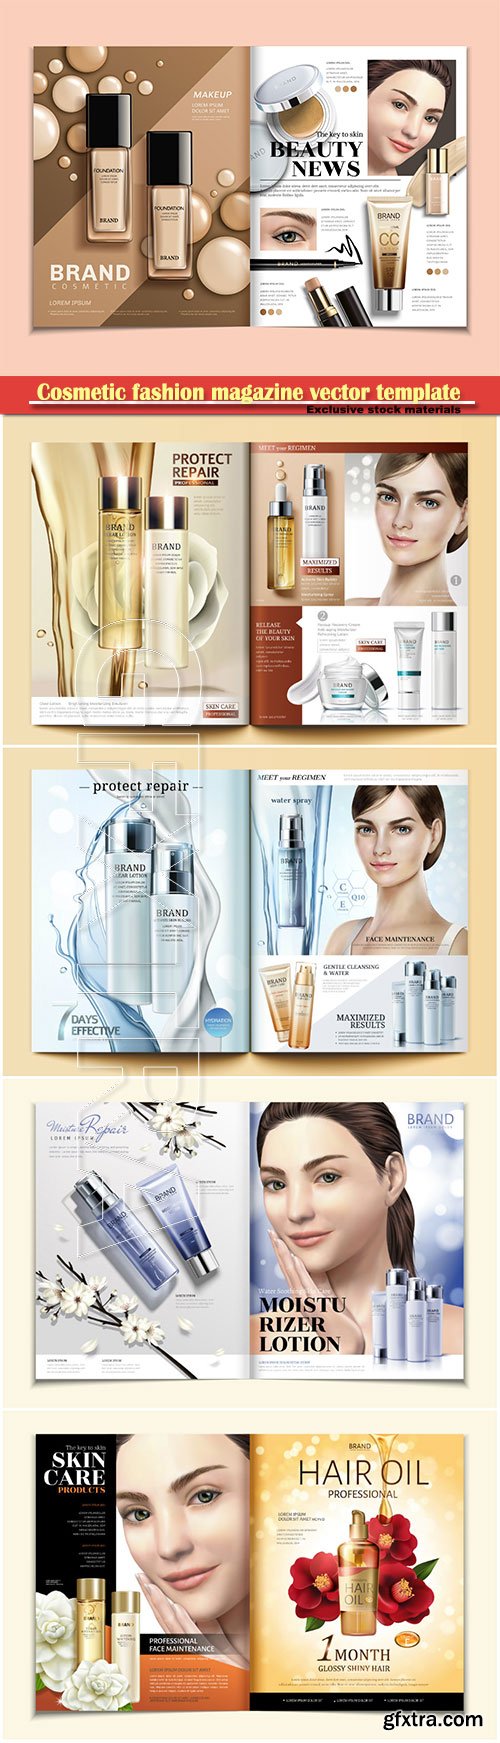 Cosmetic fashion magazine vector template #2